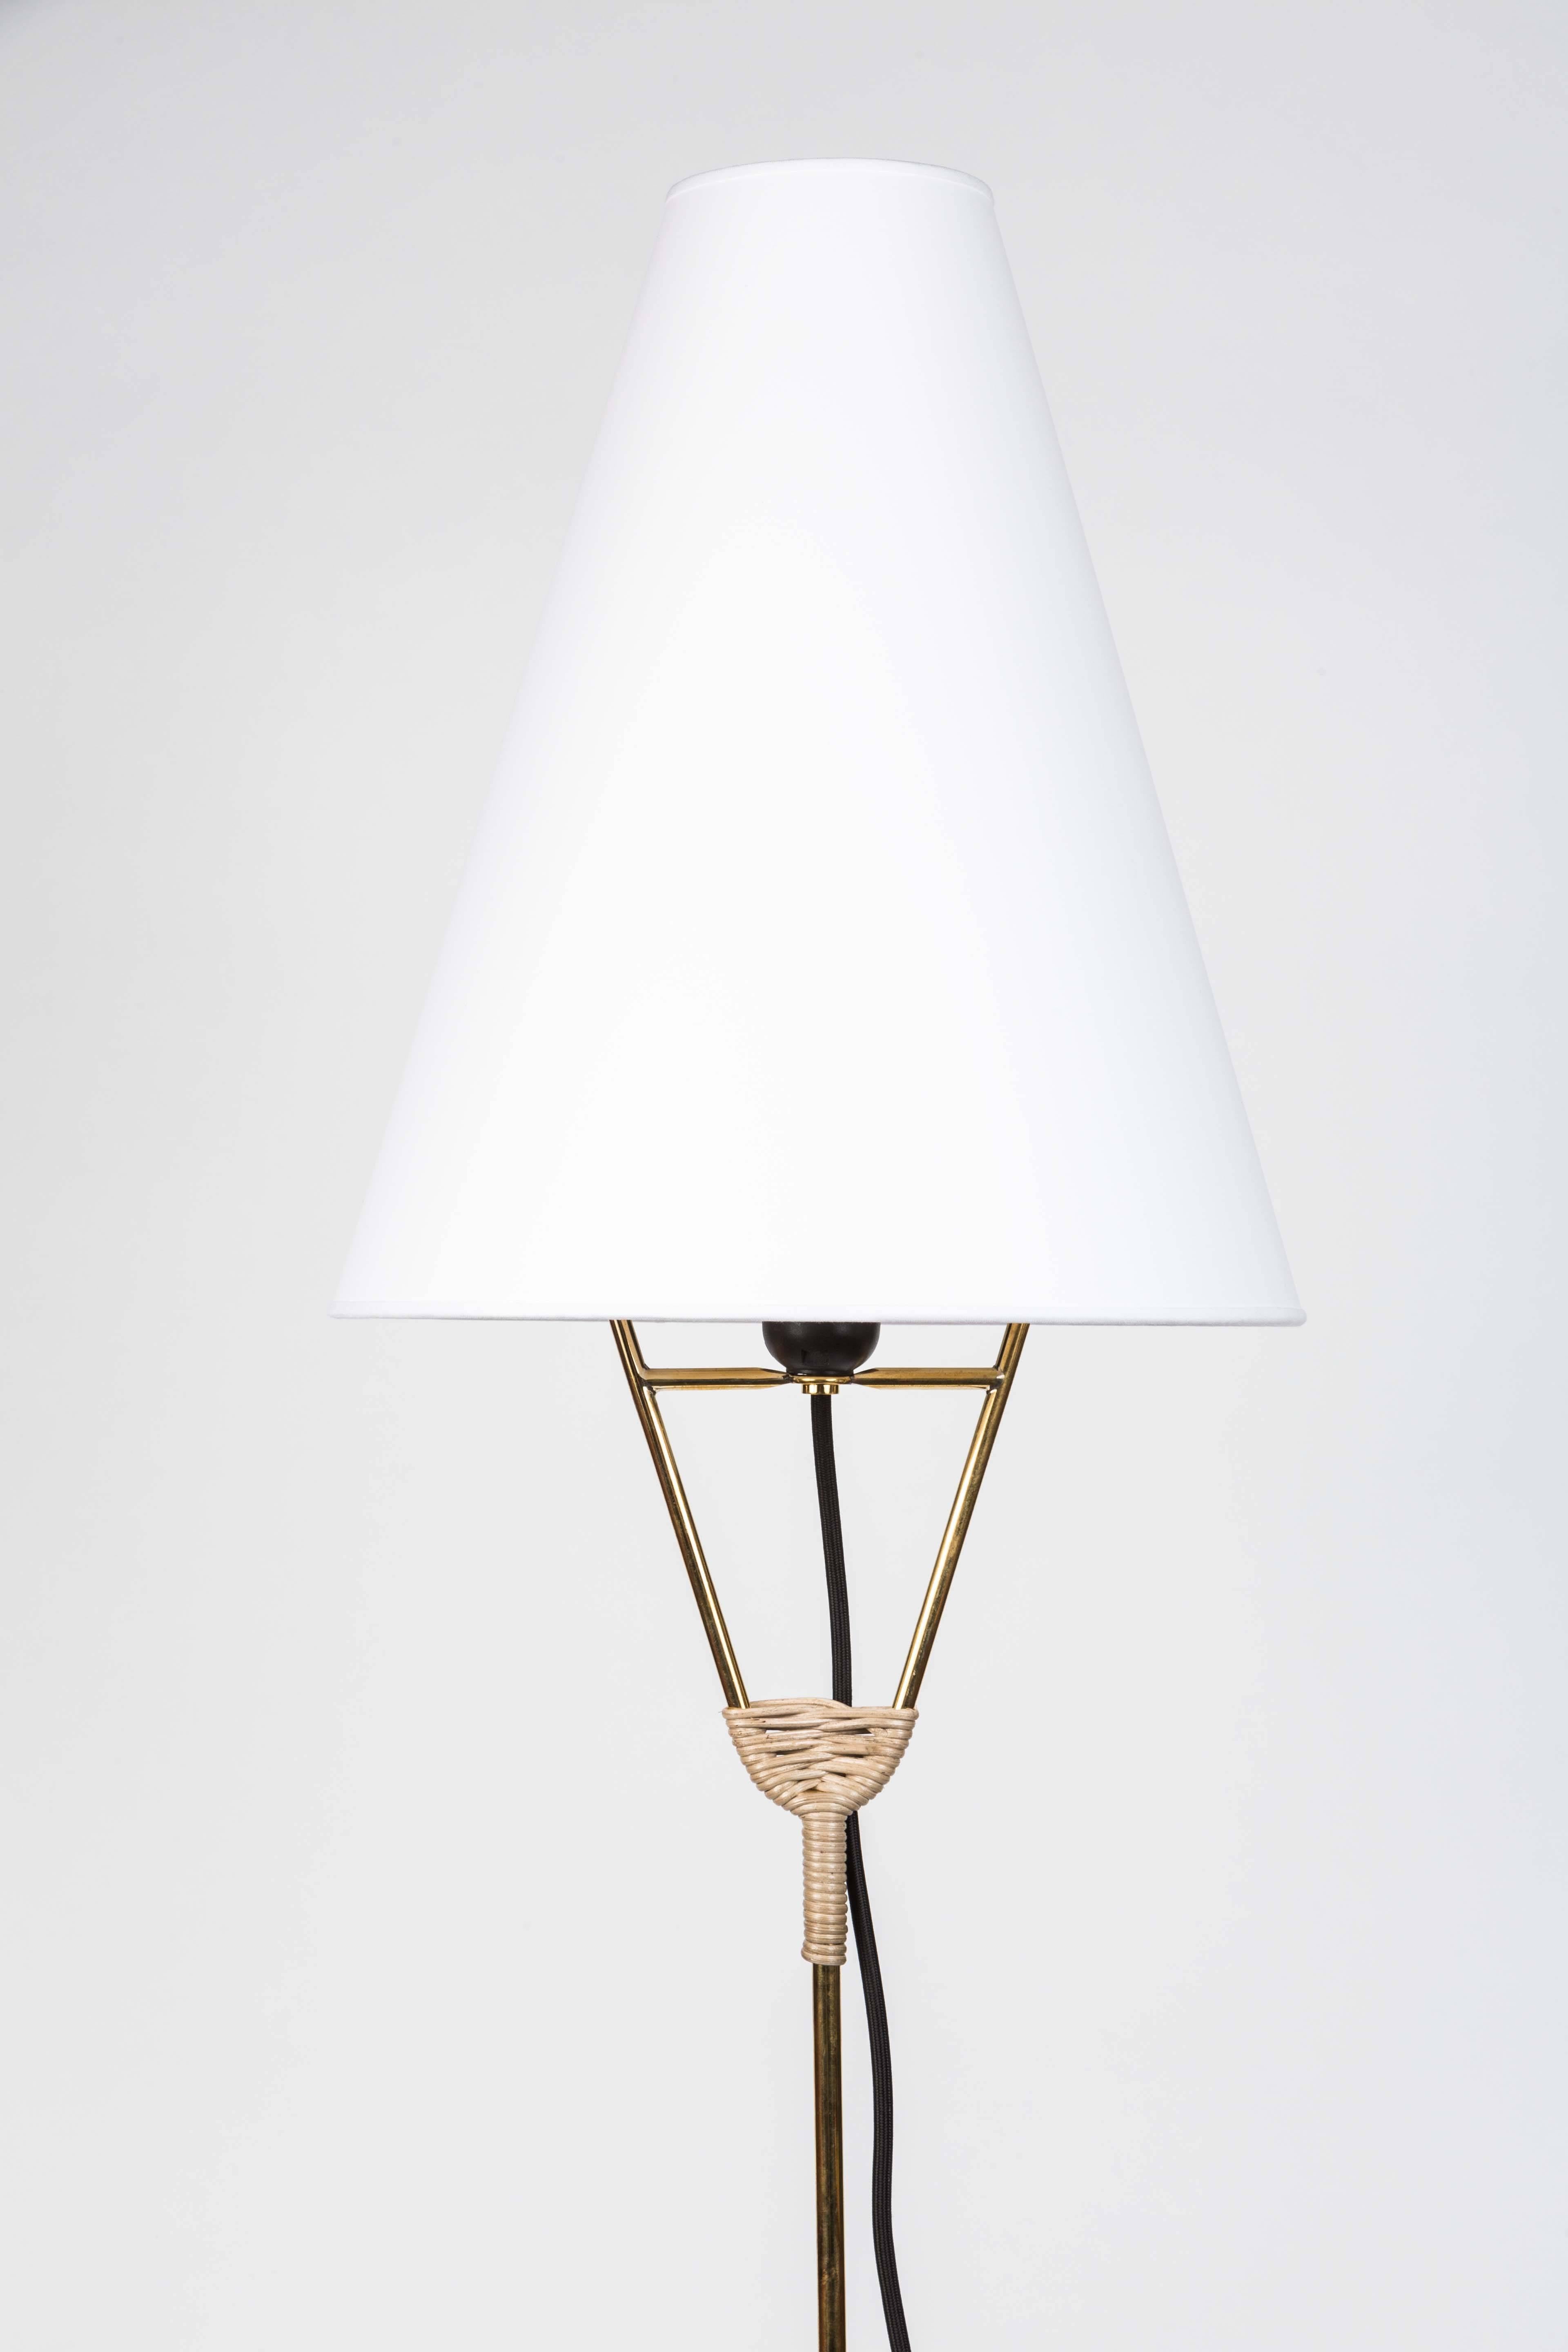 Austrian Carl Auböck Vice Versa Floor Lamp For Sale